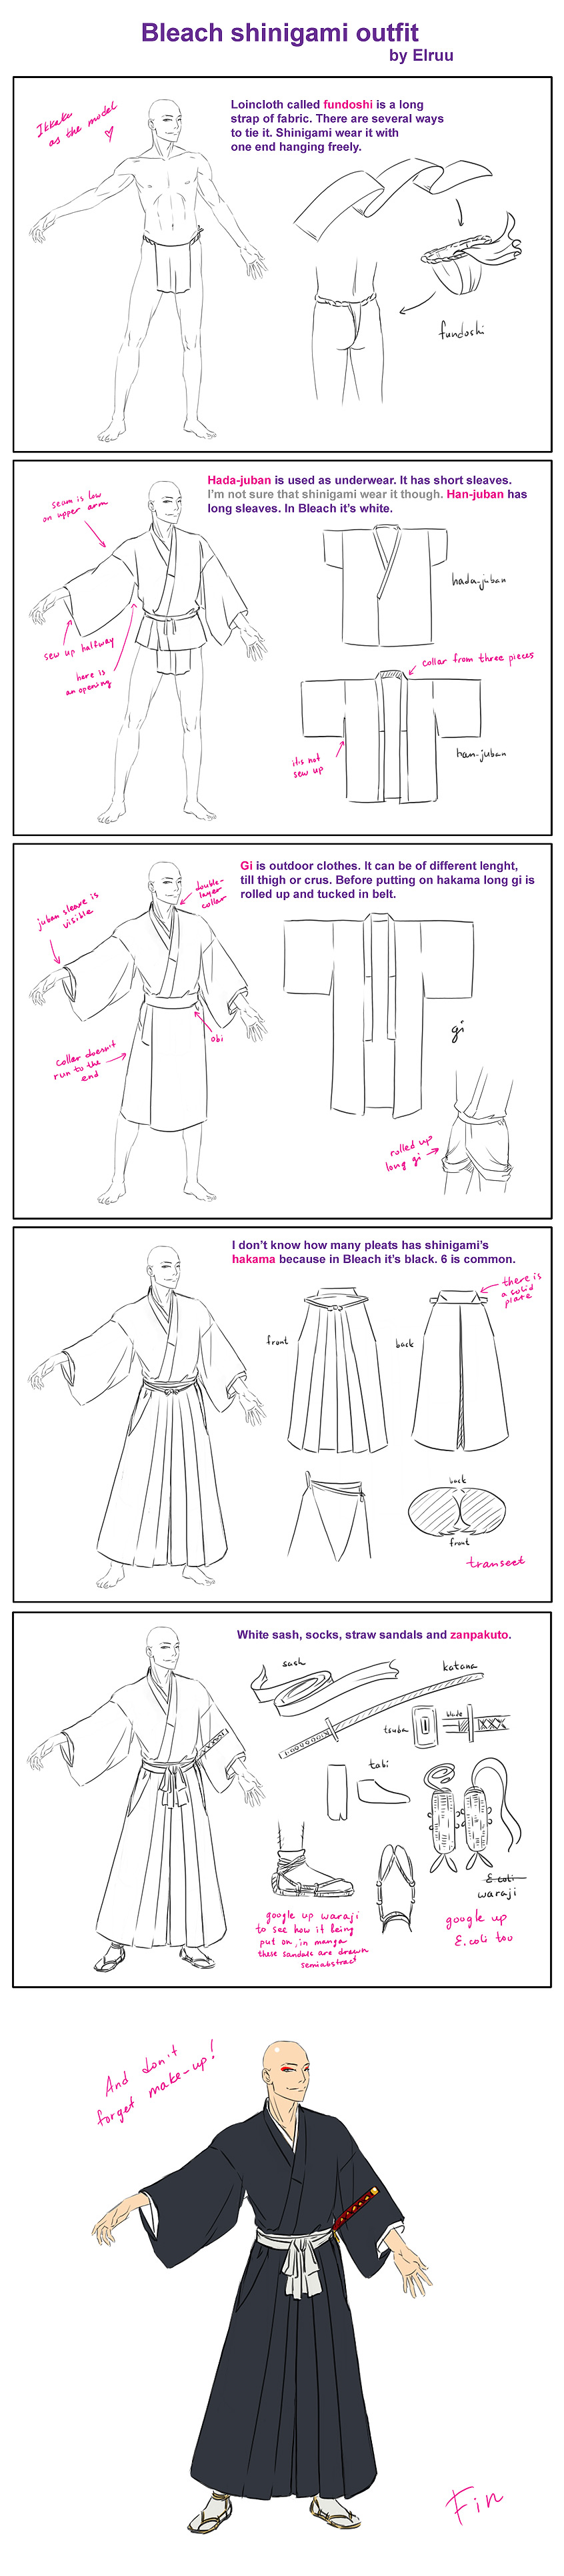 Bleach shinigami outfit